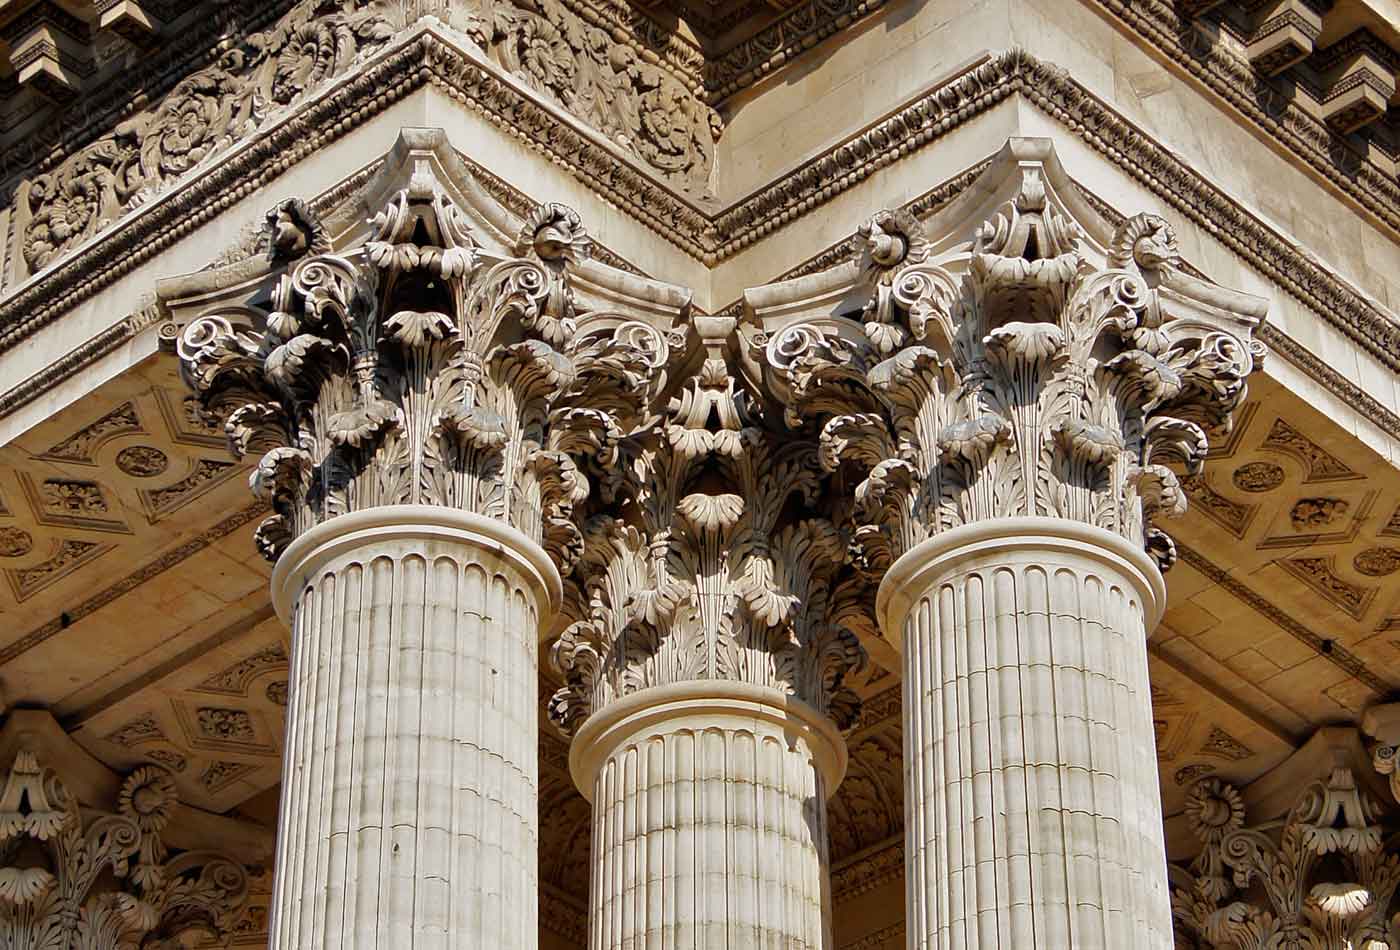 Pantheon of Paris.